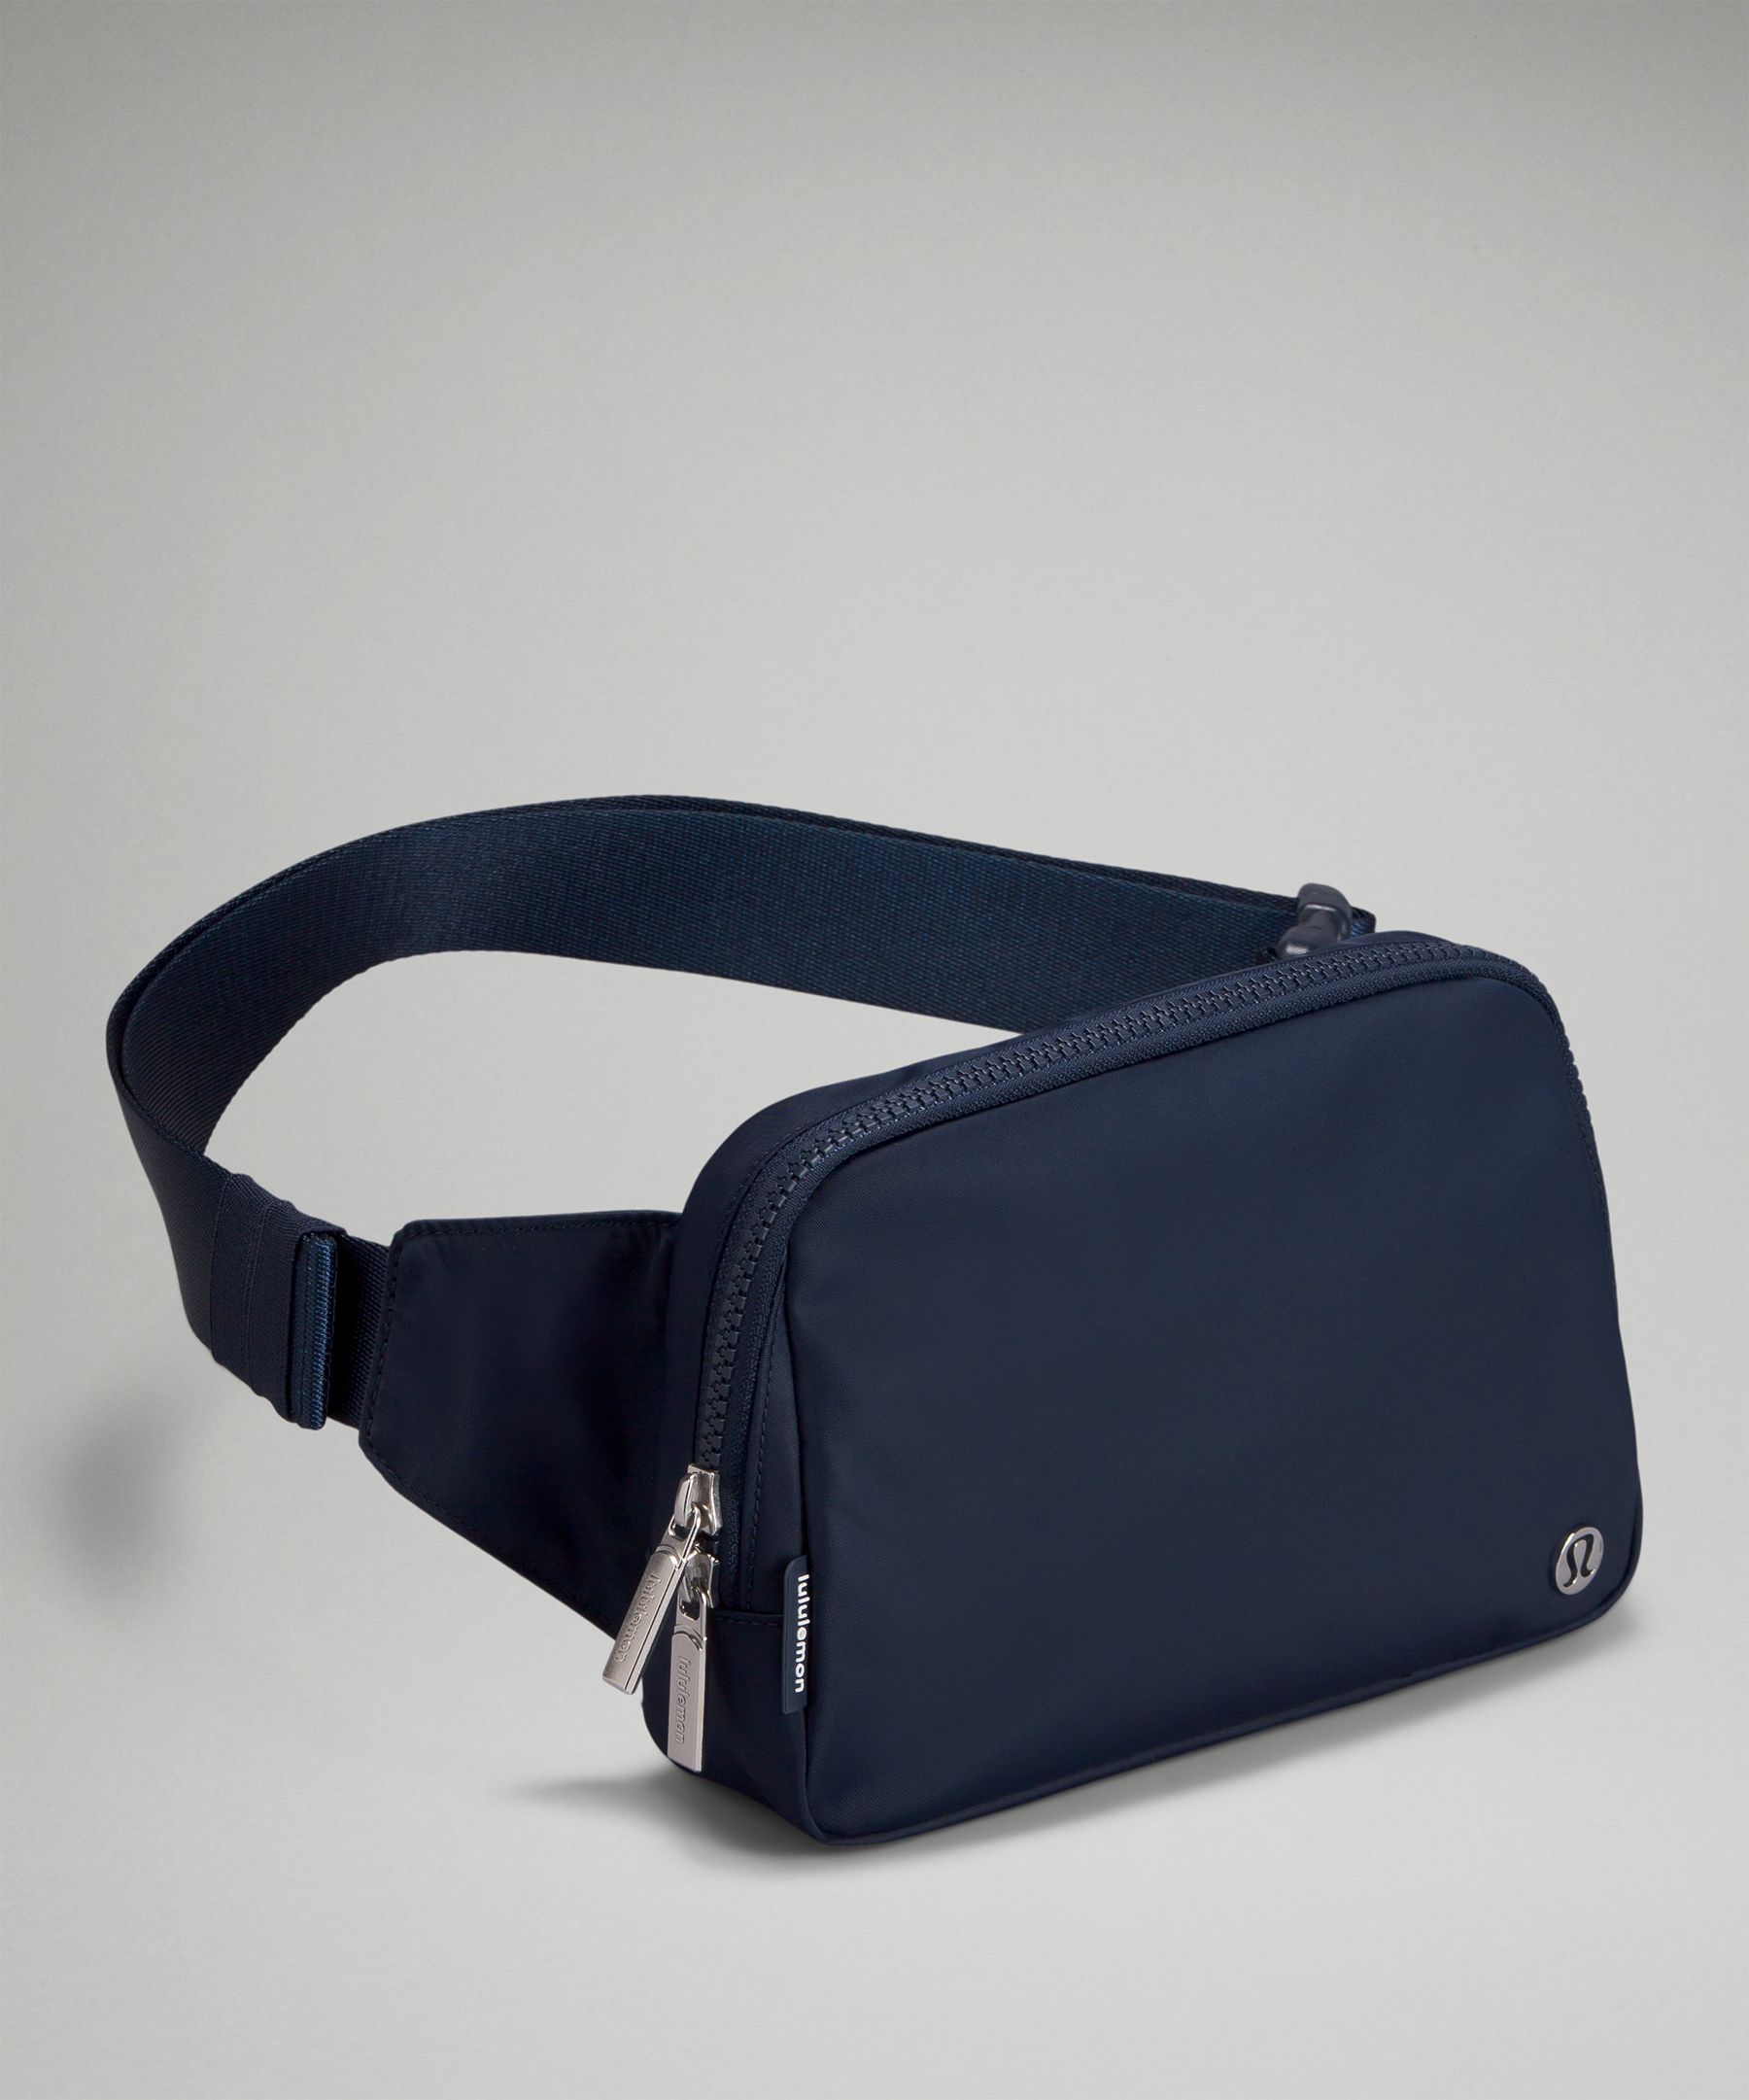 Belt Bag By Lululemon Size: Small